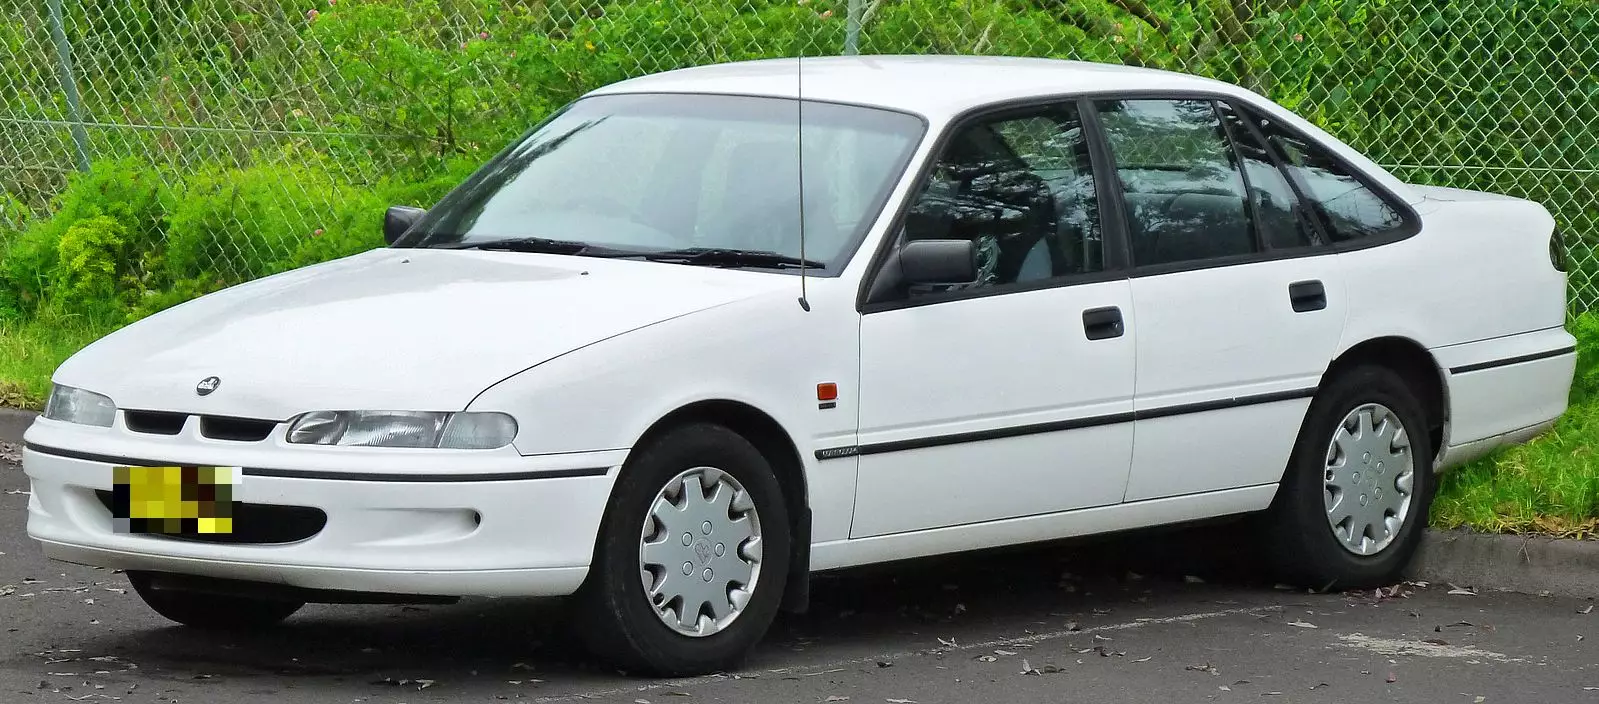 .C1995 Holden Commodore (VR II) Executive sedan.